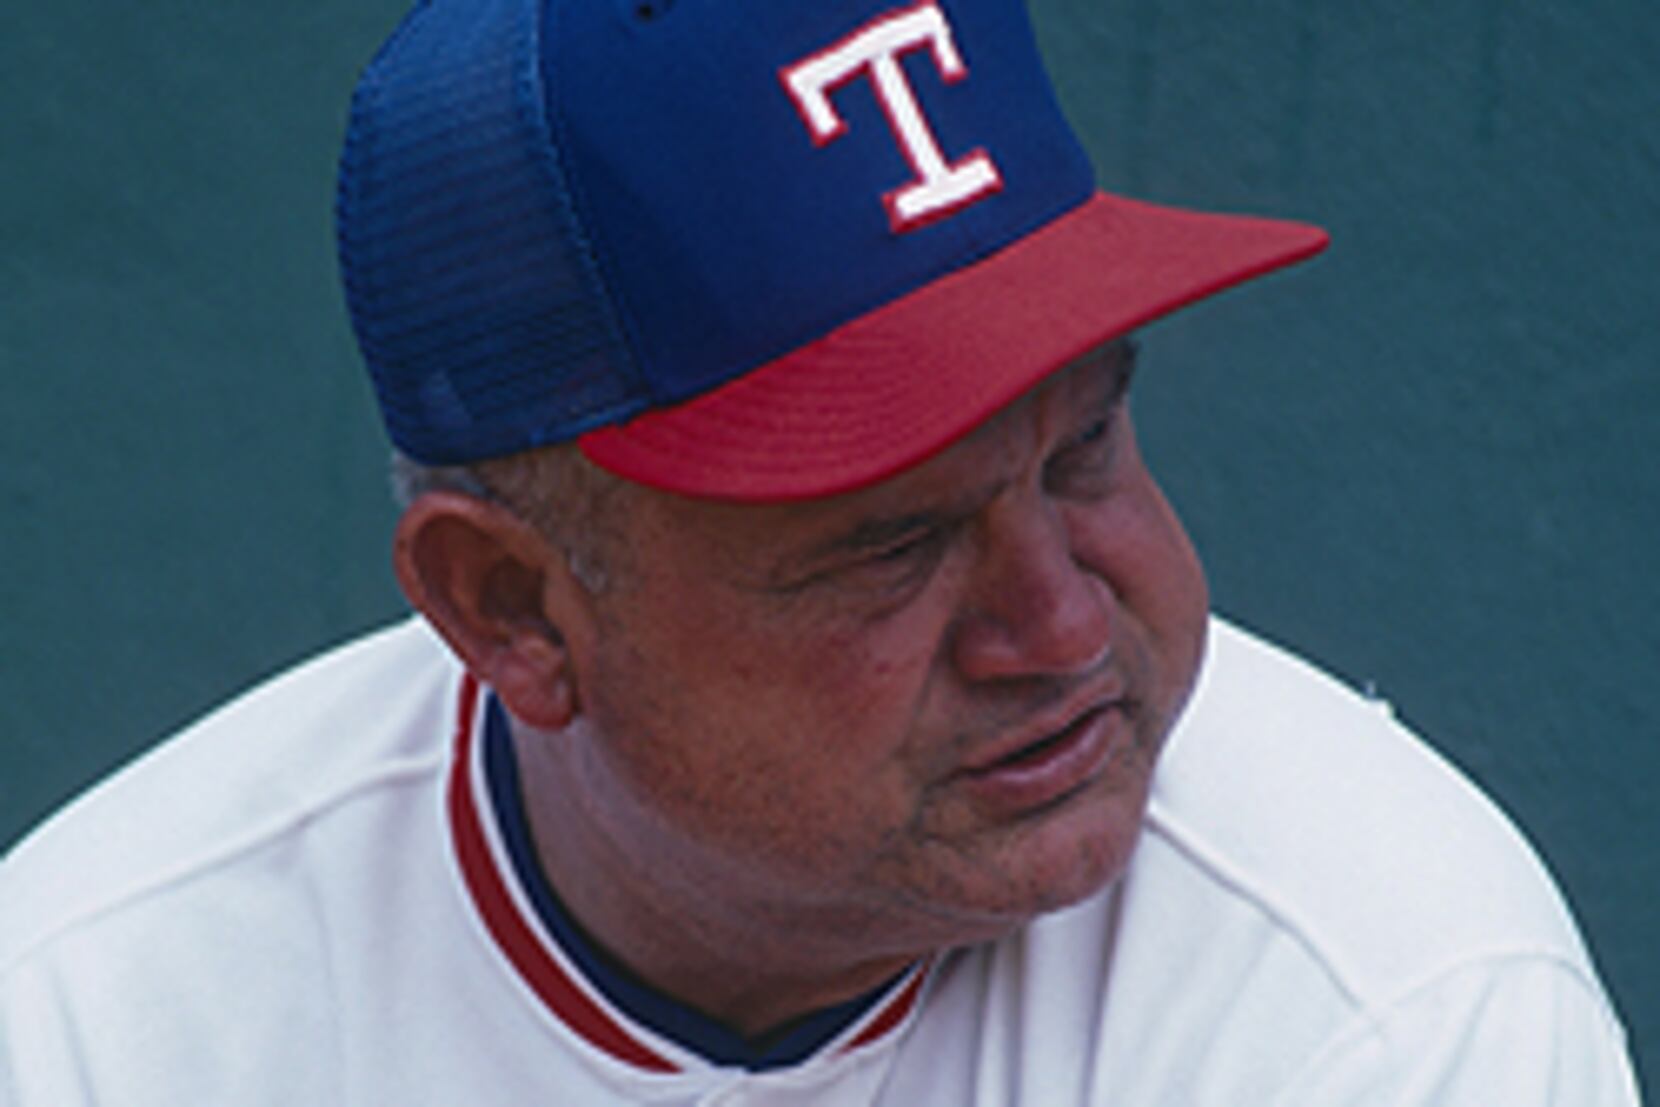 Former Rangers manager, baseball legend Don Zimmer dies at age 83